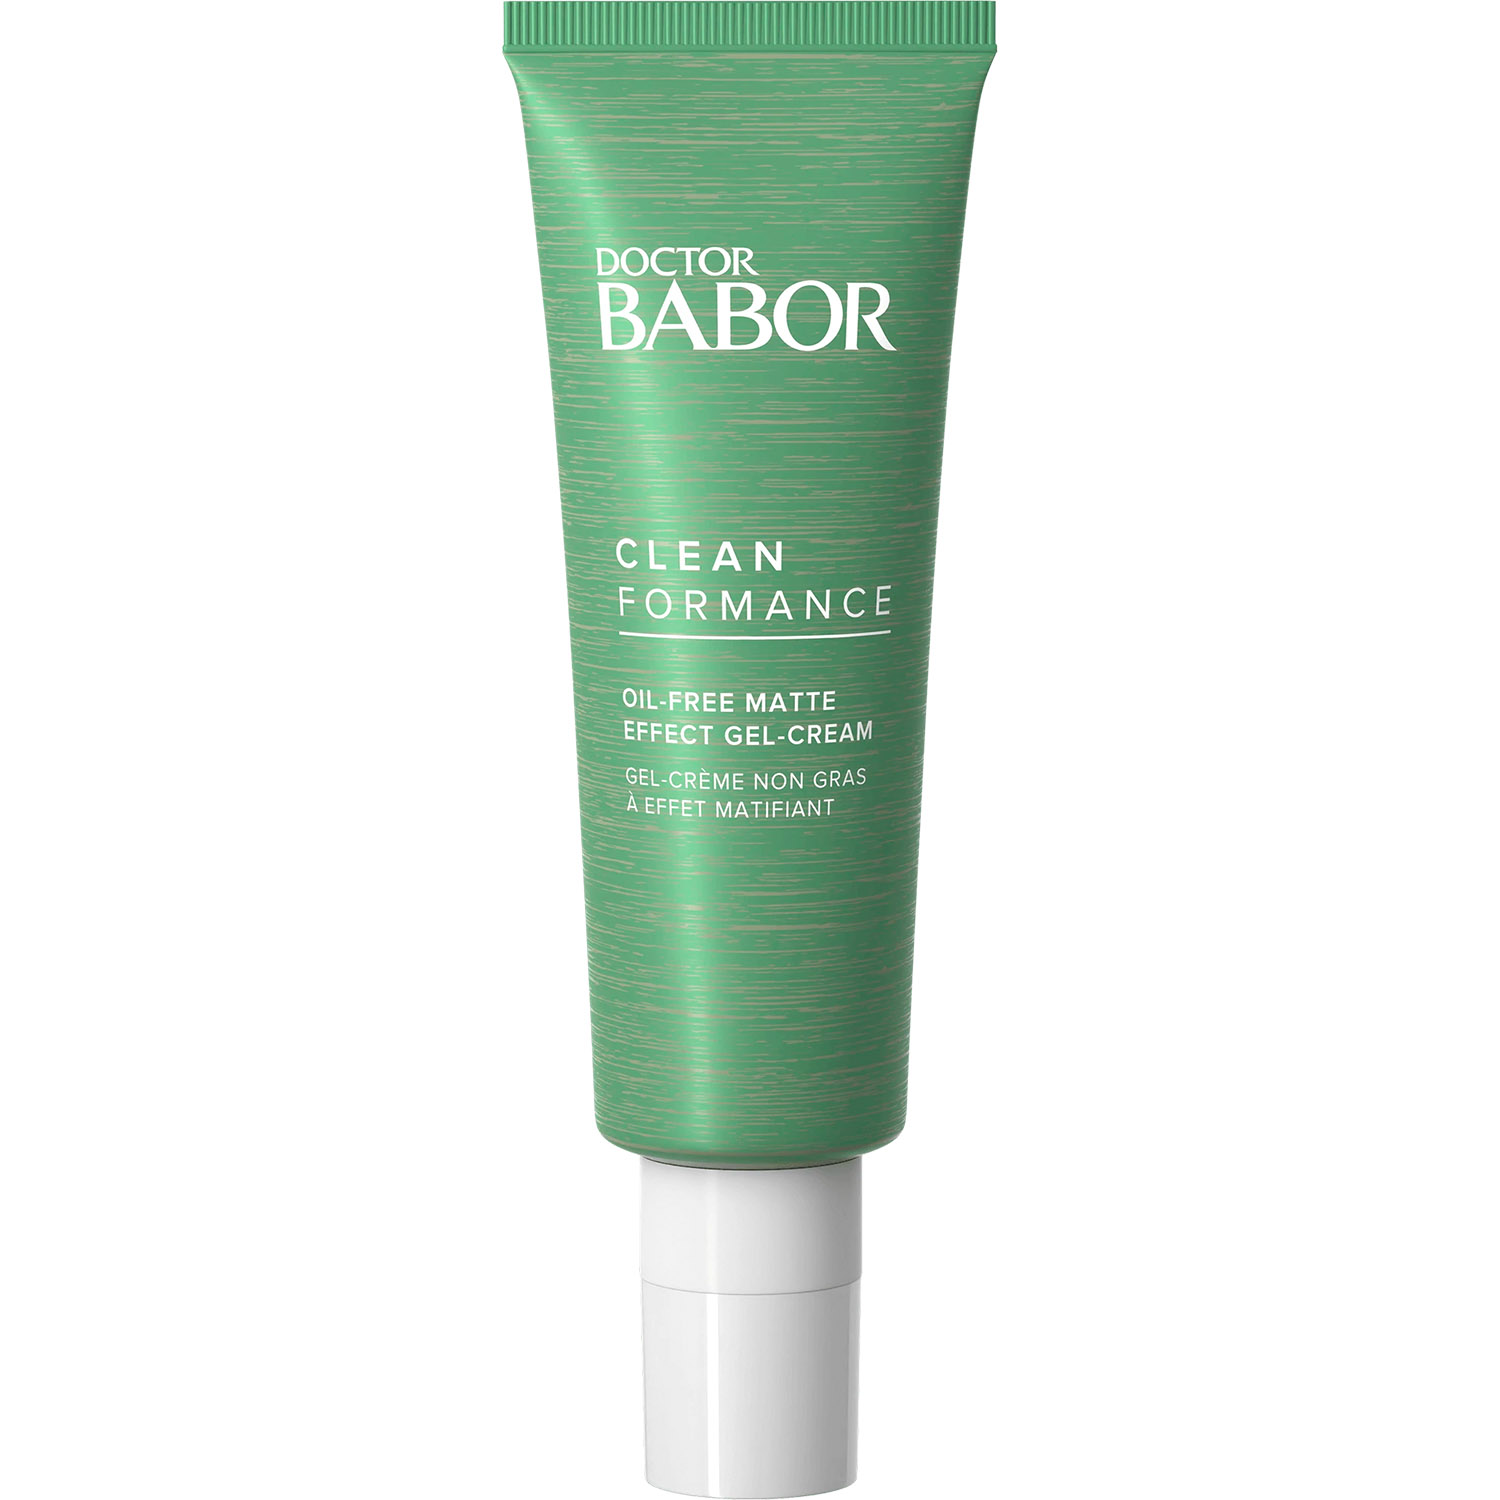 Матирующий гель-крем для лица Babor Doctor Babor Clean Formance Oil-Free Matte Effect Gel-Cream, 50 мл - фото 1